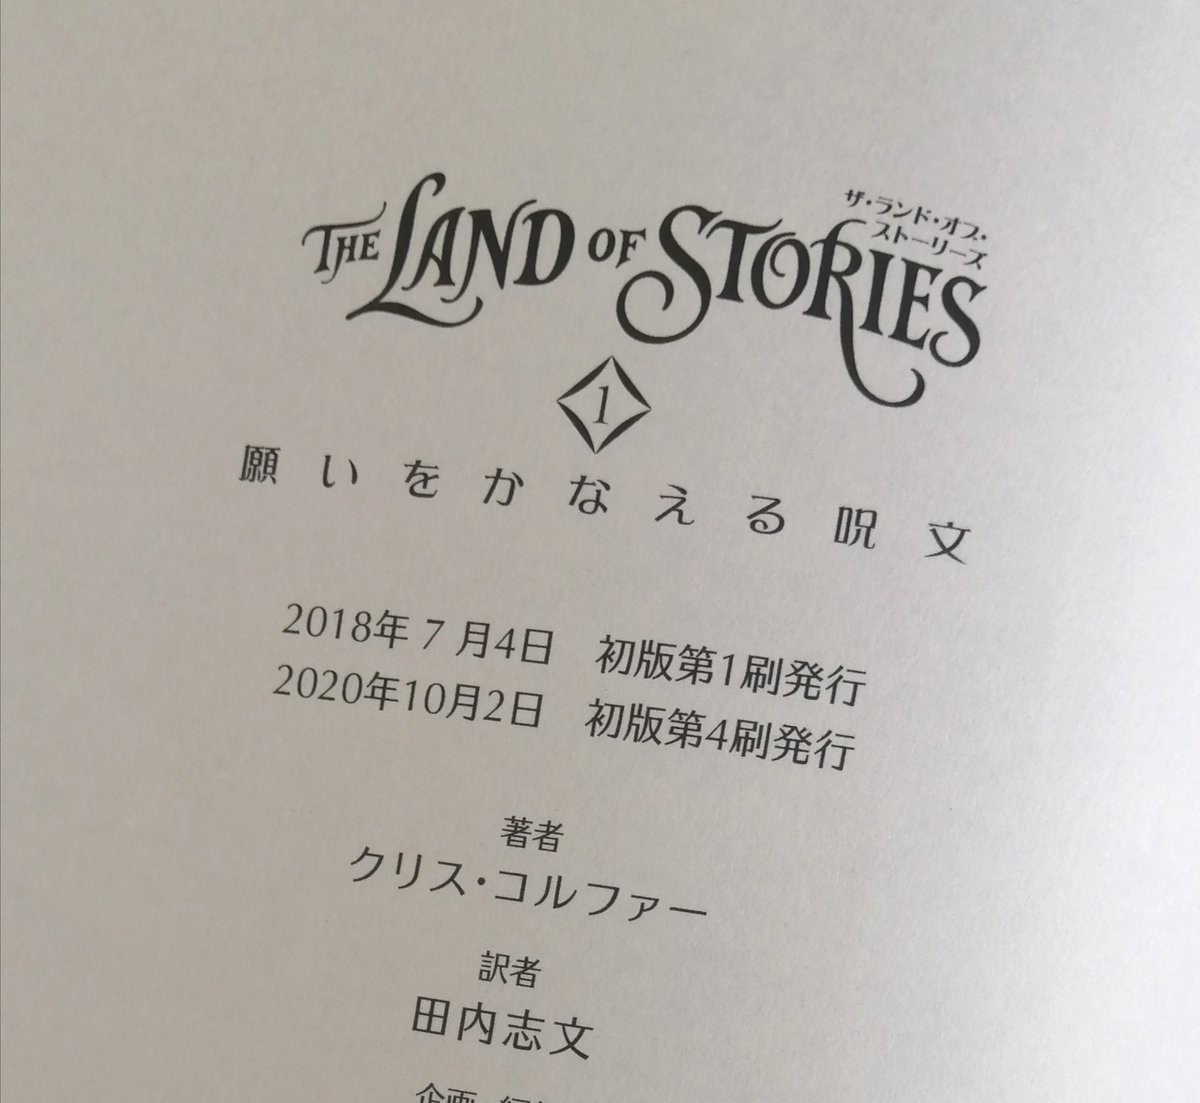 The Land Of Stories ザ ランド オブ ストーリーズ 日本語版公式 Heibonsha1914 Twitter